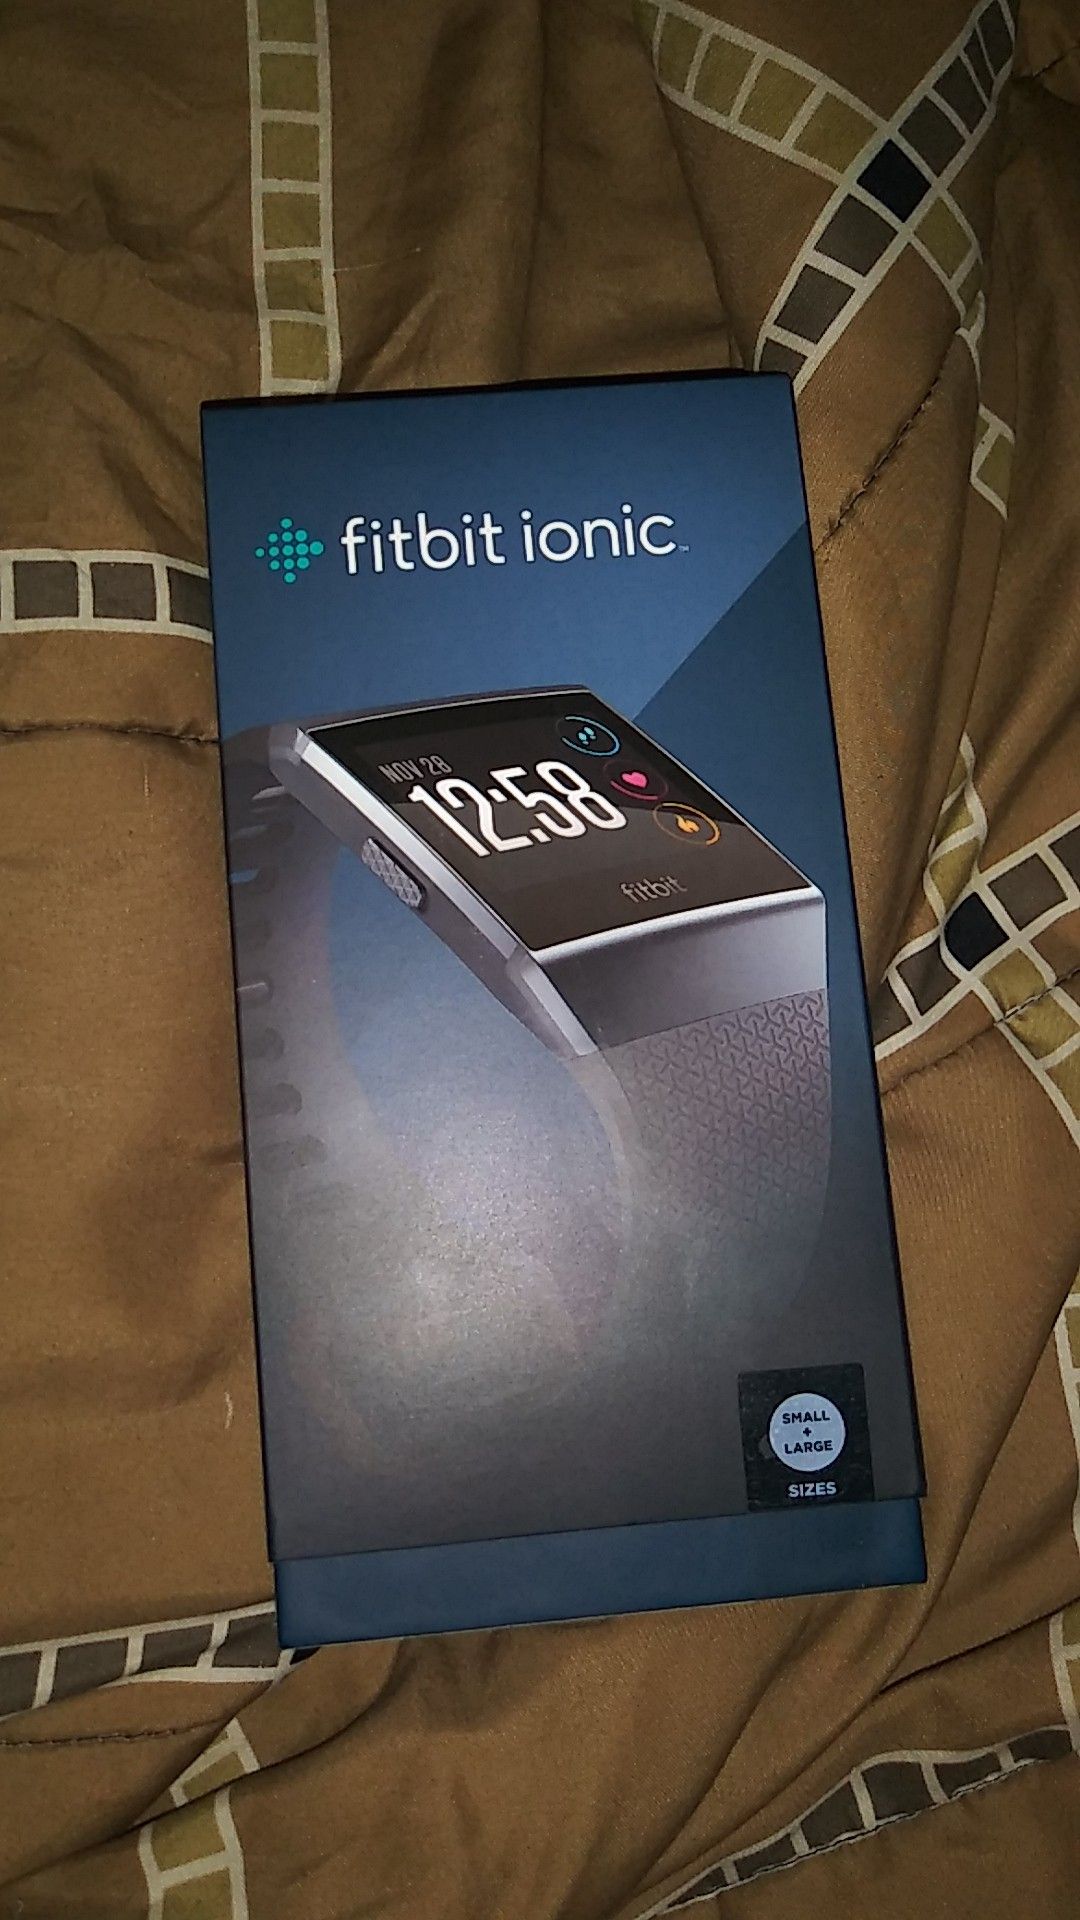 Fitbit ionic